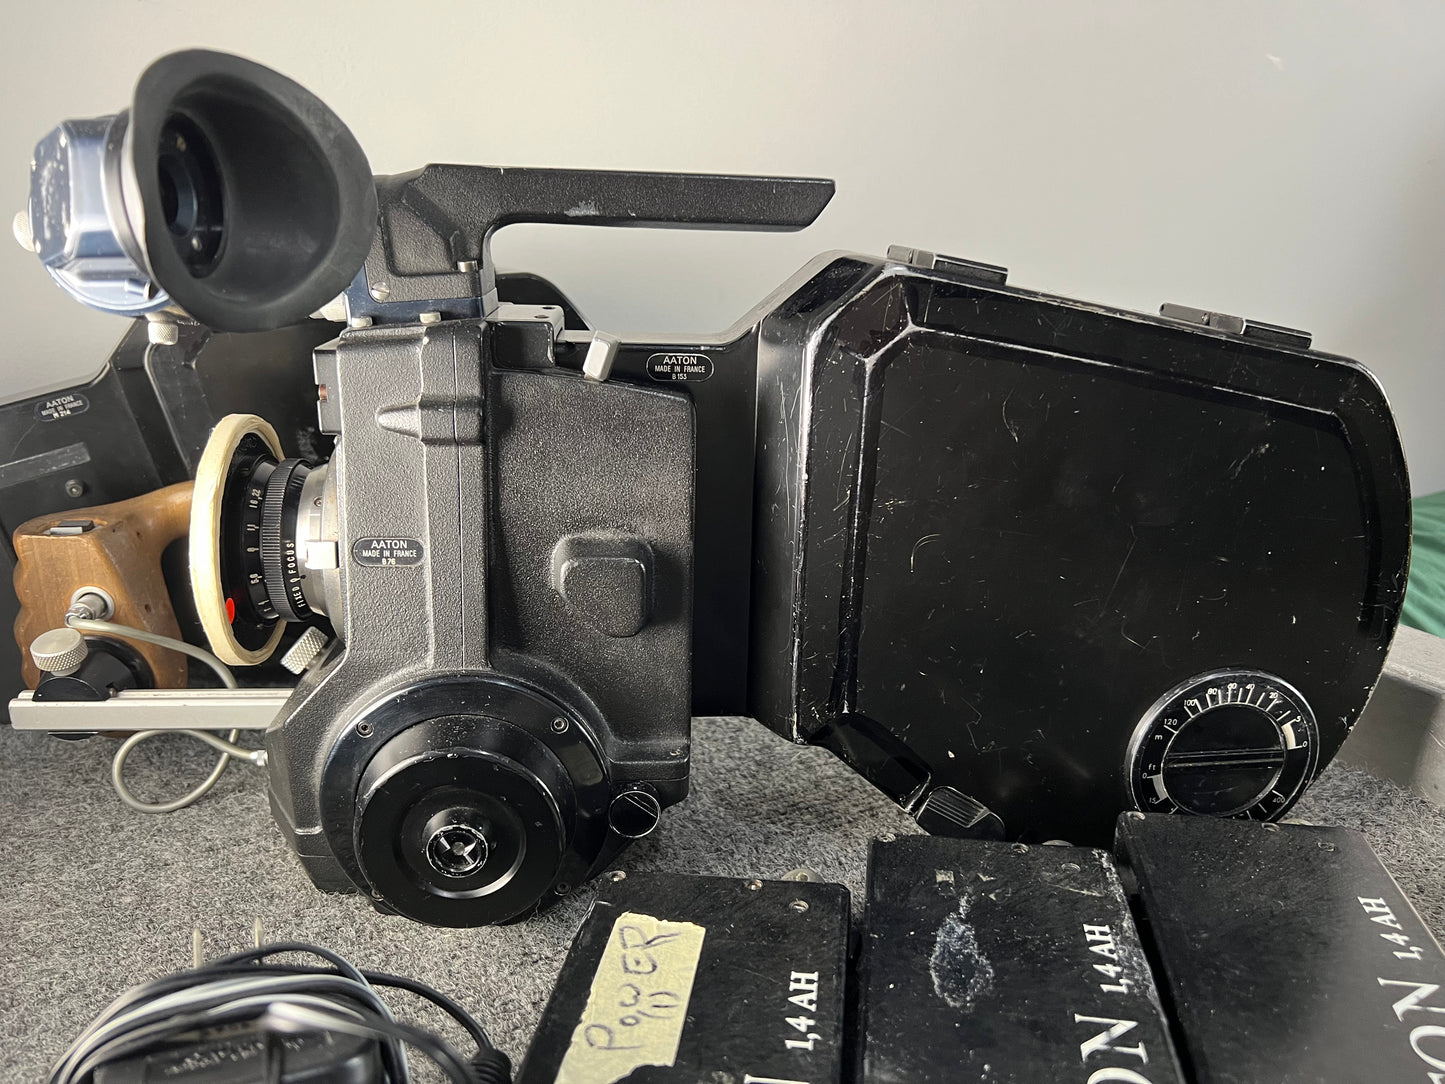 Aaton LTR 54 super 16mm movie camera